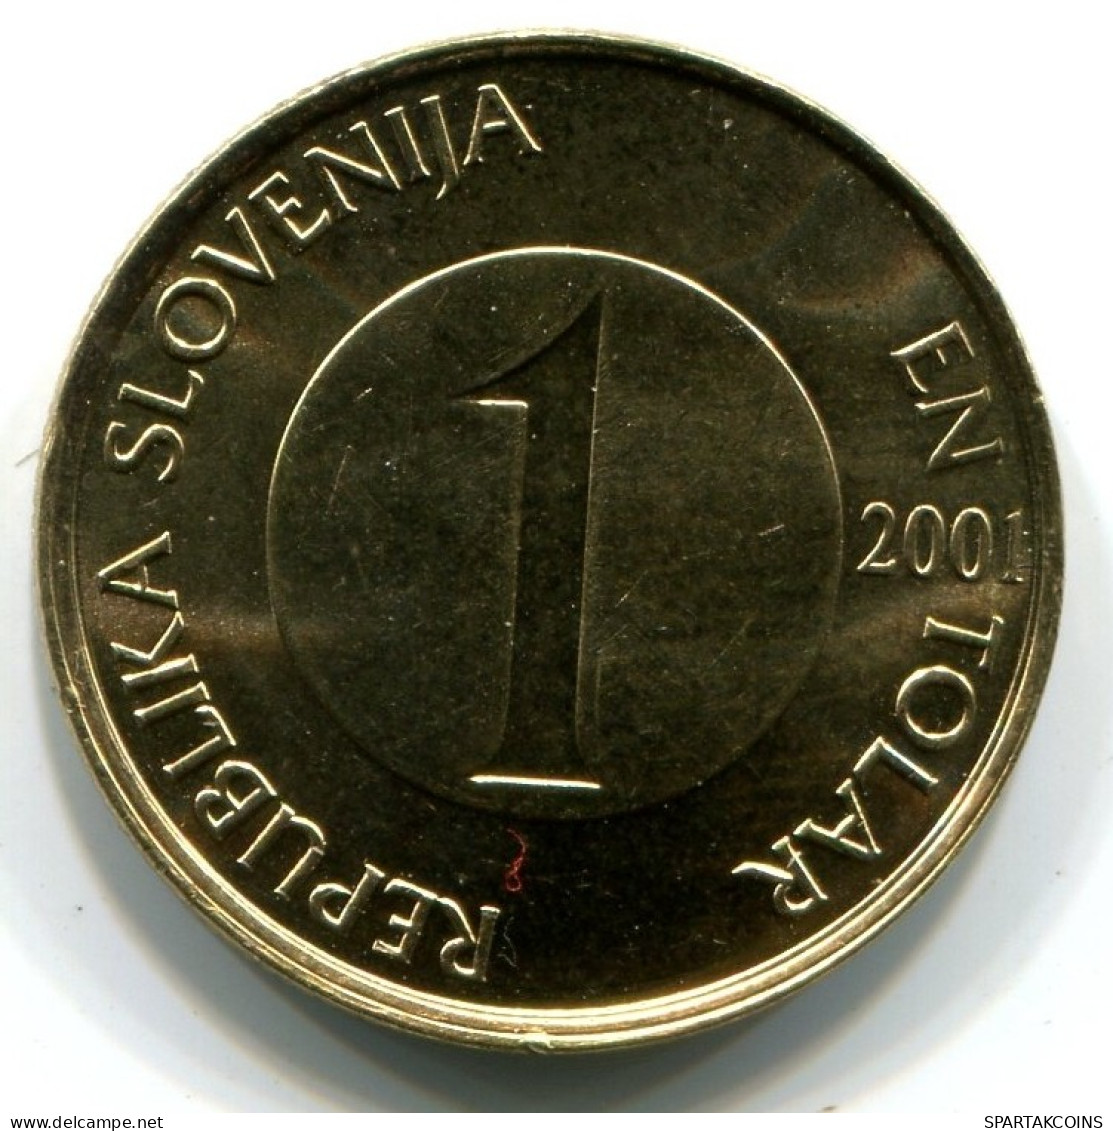 1 TOLAR 2001 SLOVENIA UNC Fish Coin #W11370.U.A - Eslovenia